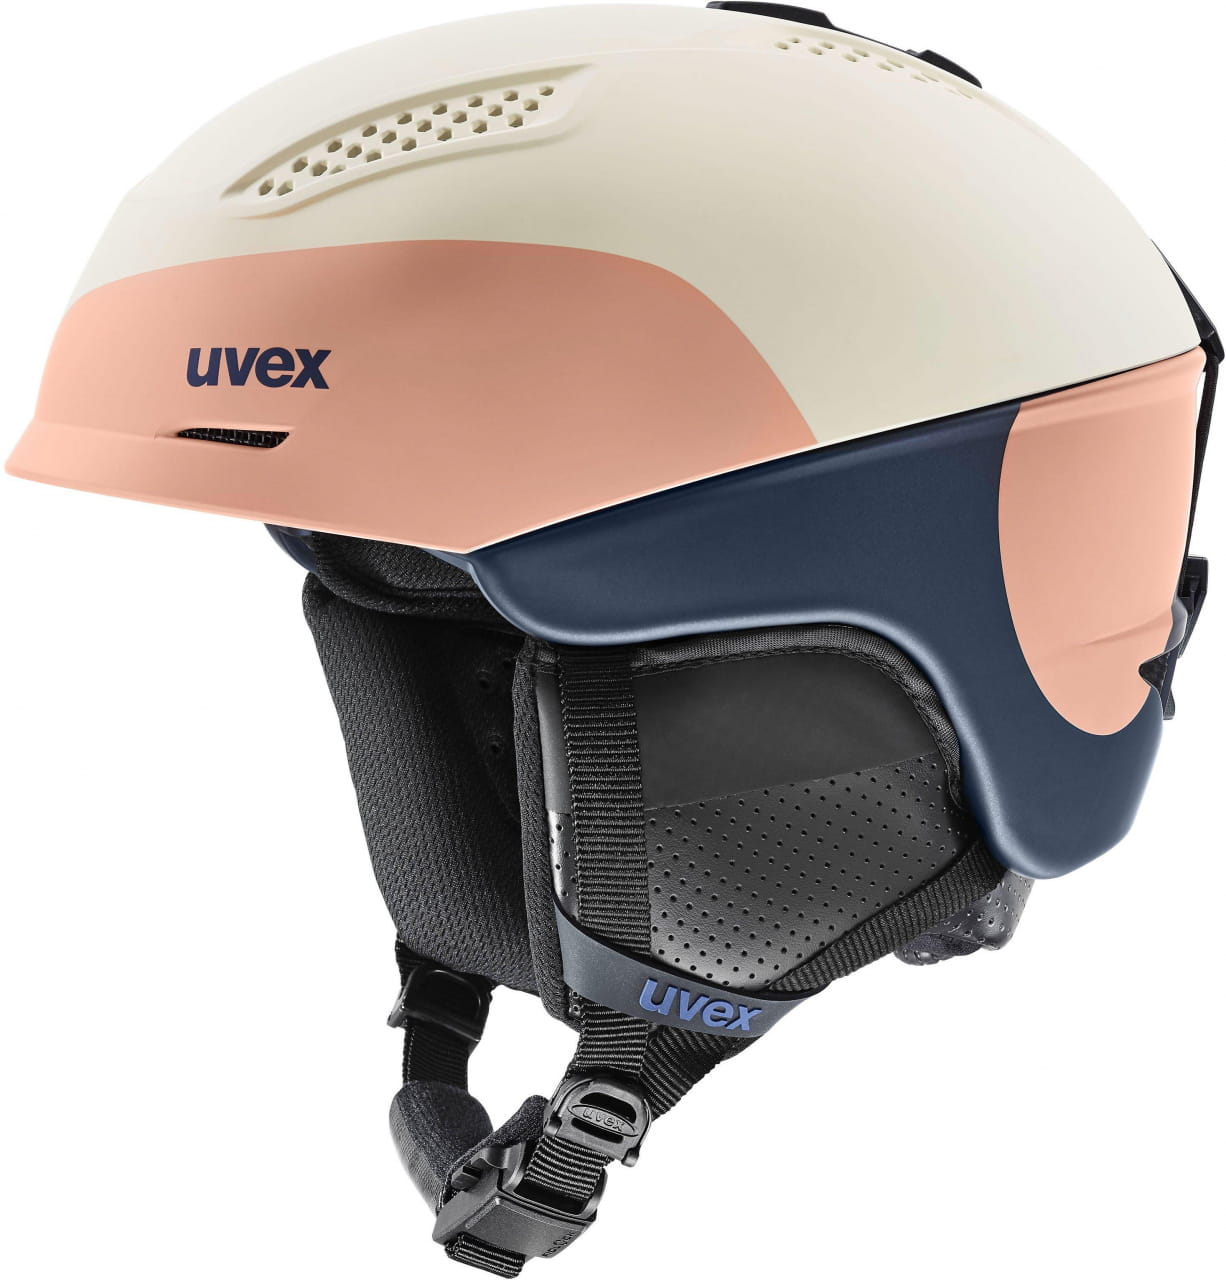 Damski kask narciarski Uvex Ultra Pro W